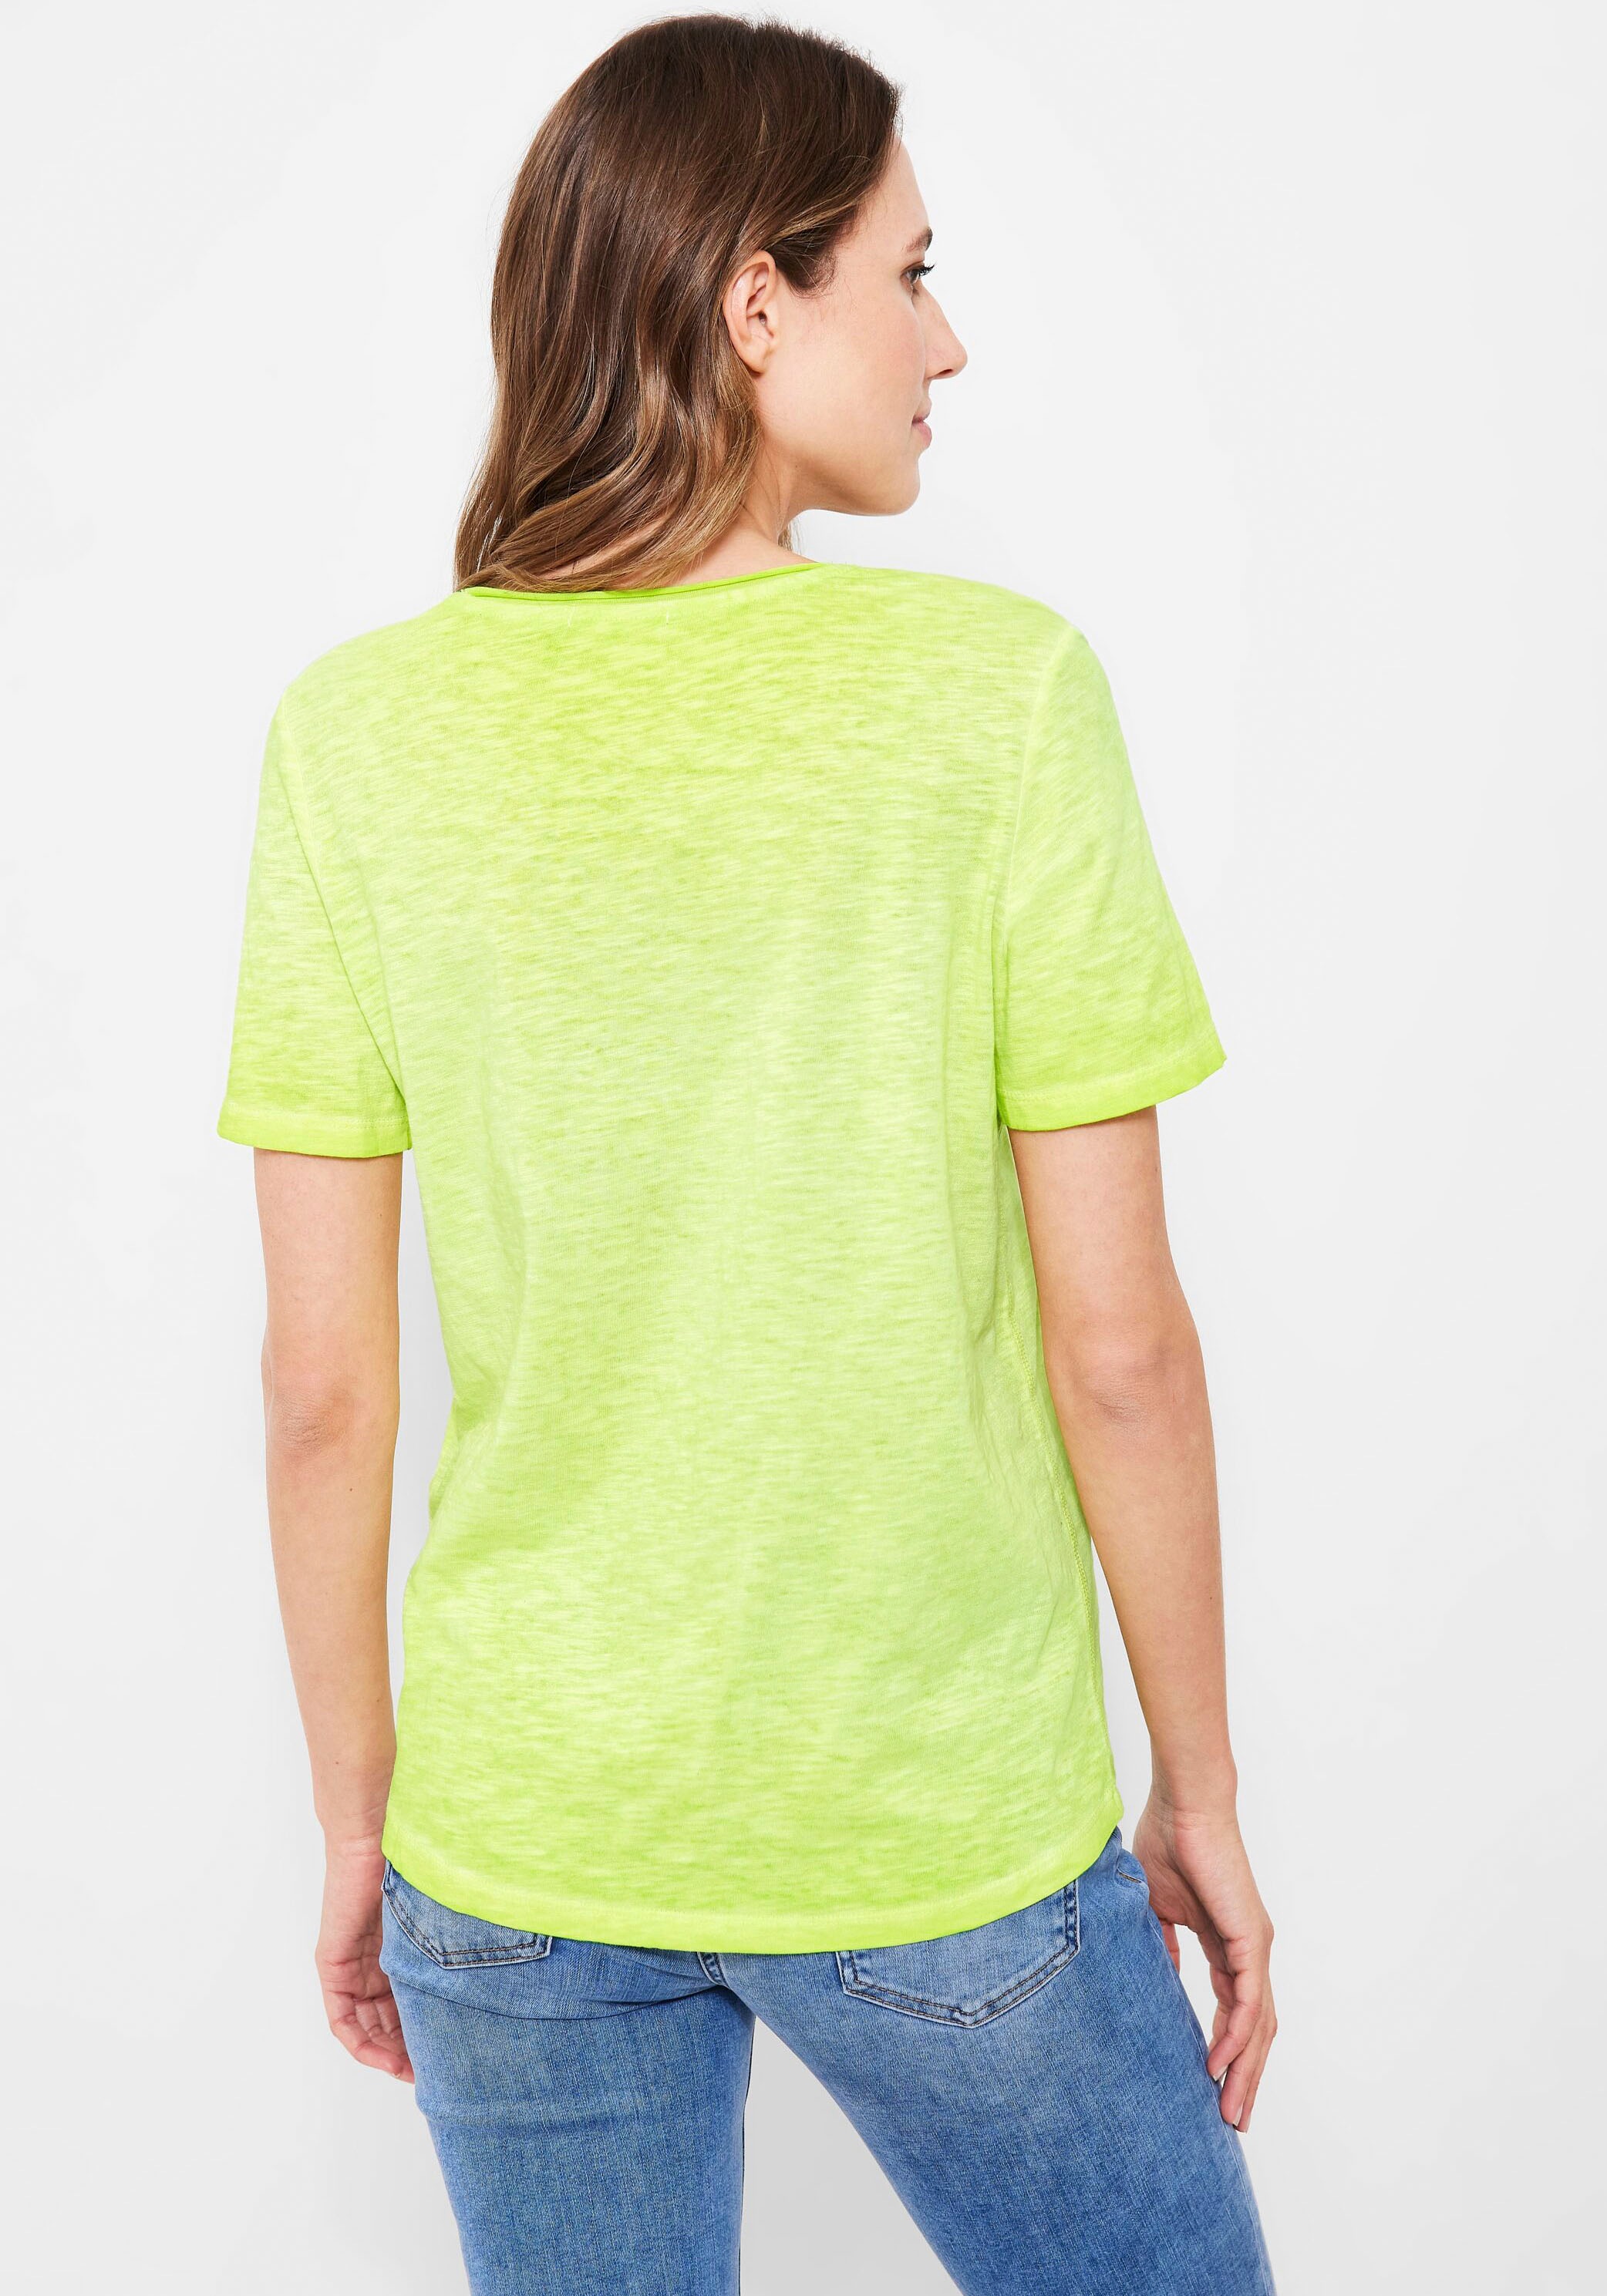 Acheter trendiger simplement Flammgarn-Optik Cecil T-Shirt, in